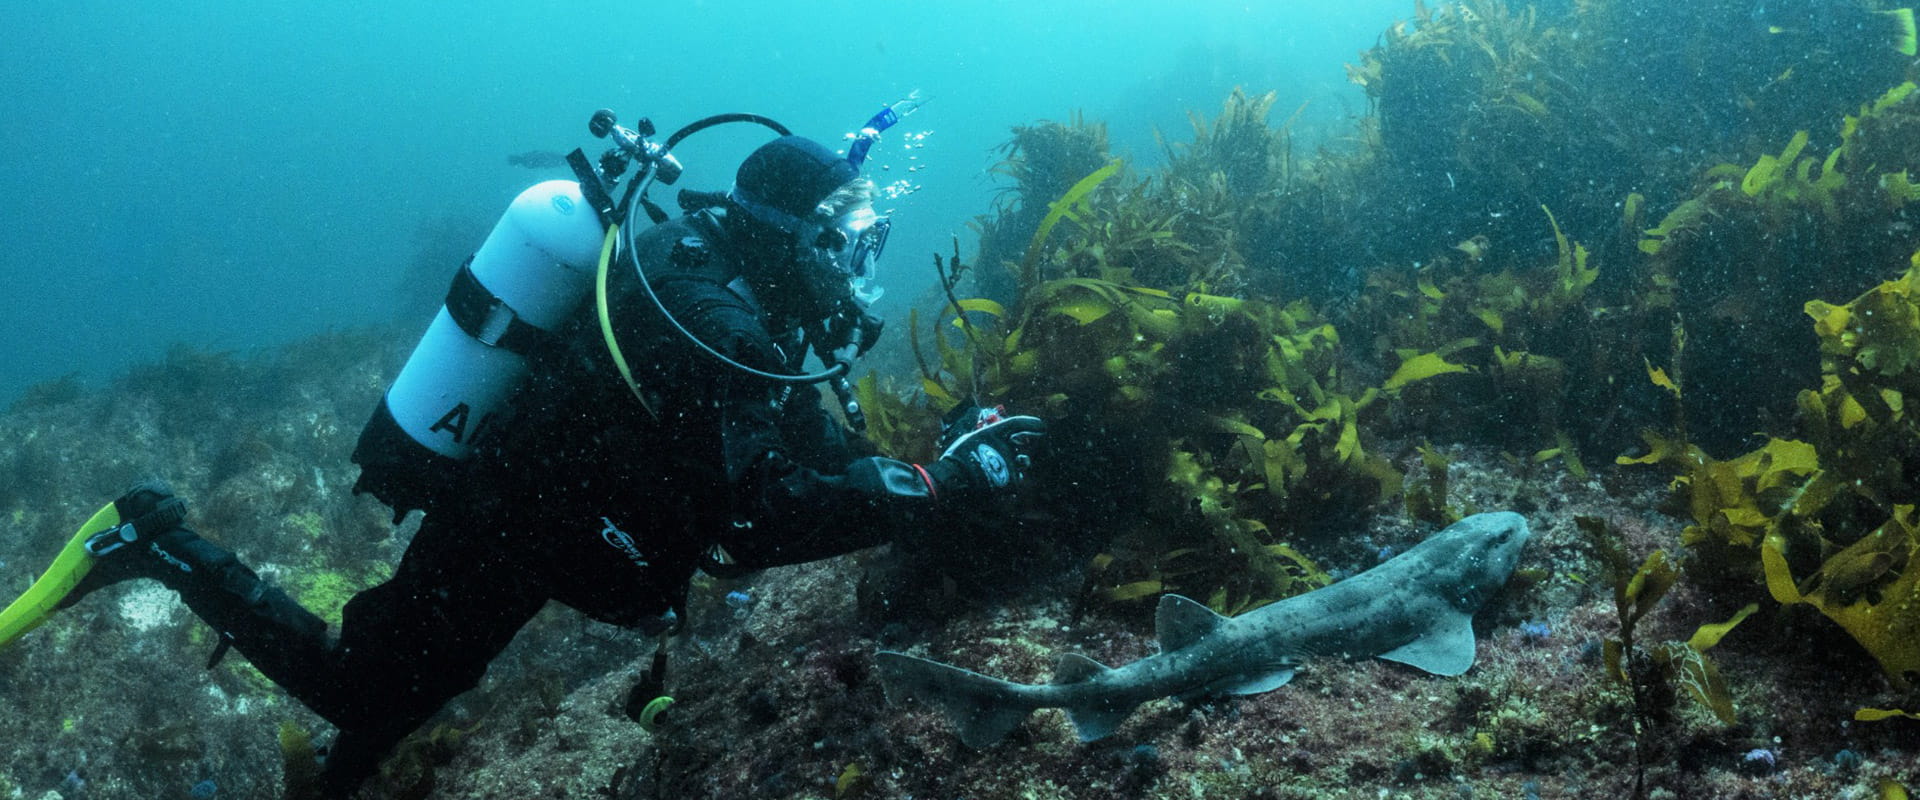 A scuba diver inspects restored kelp, a small shark keeps him company.